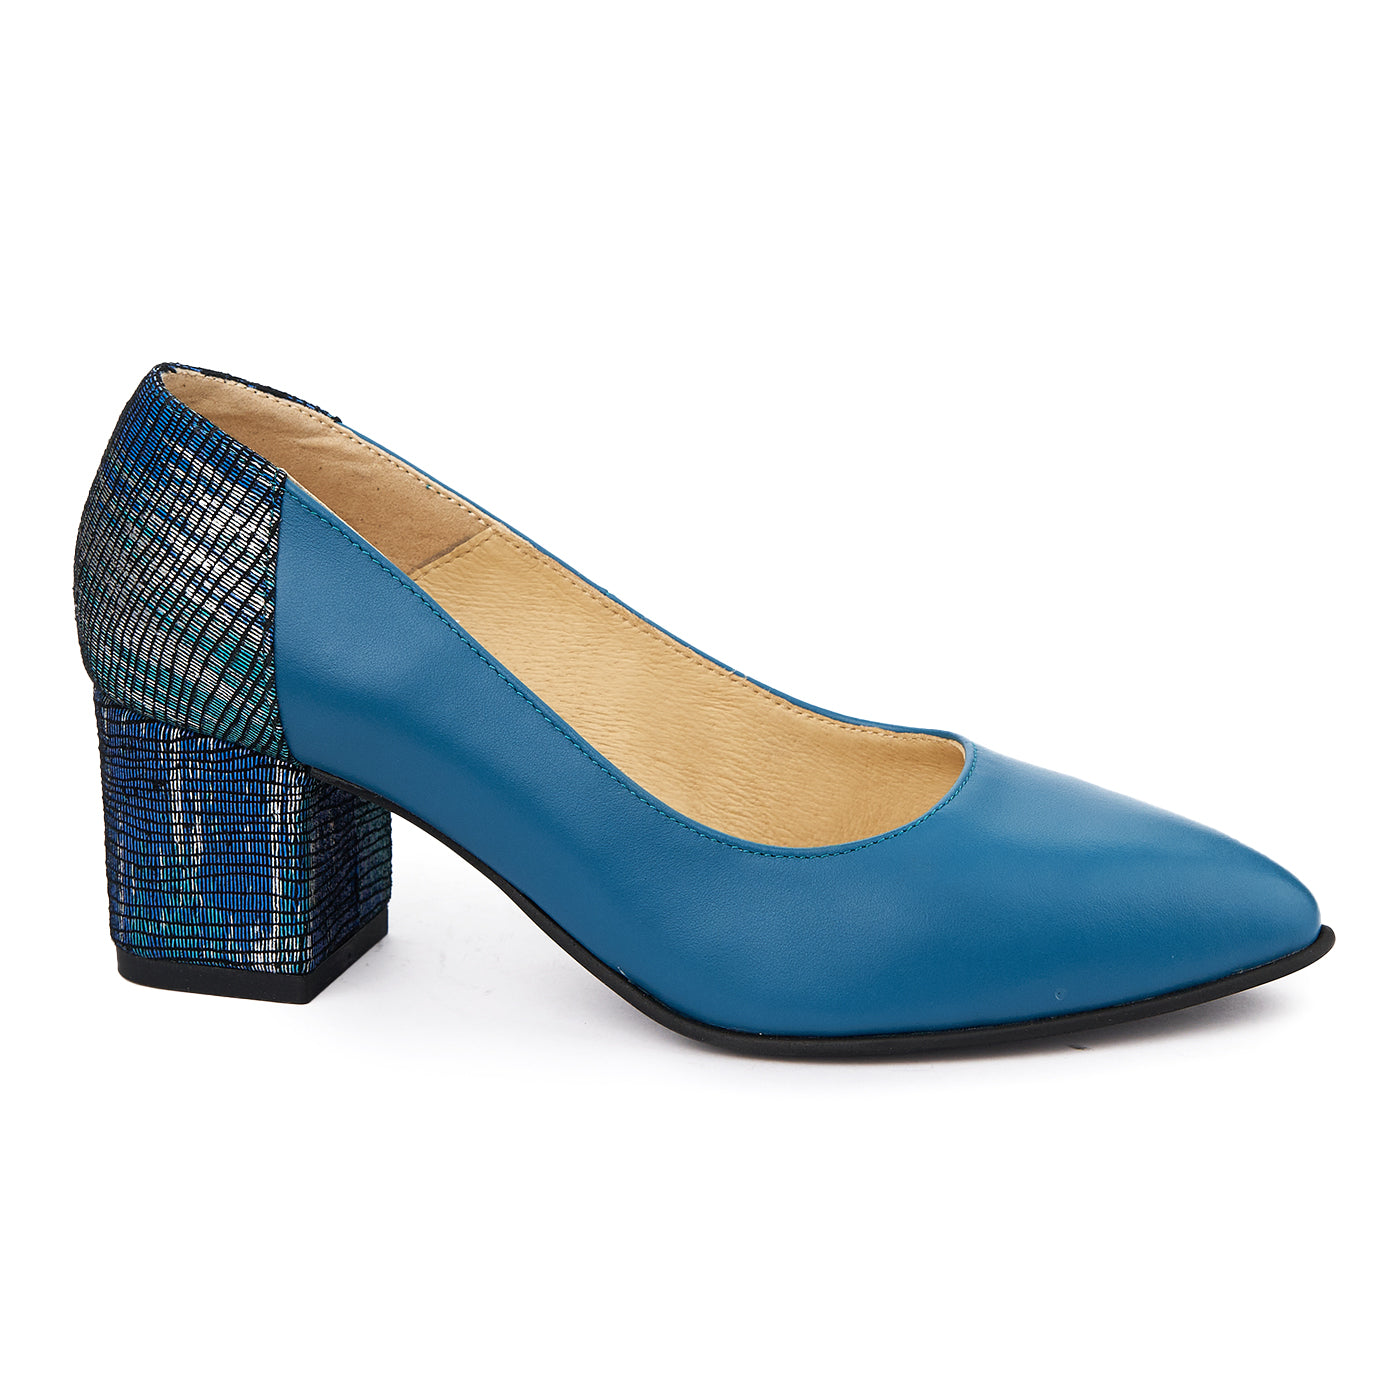 Pantofi dama din piele naturala albastra 4935